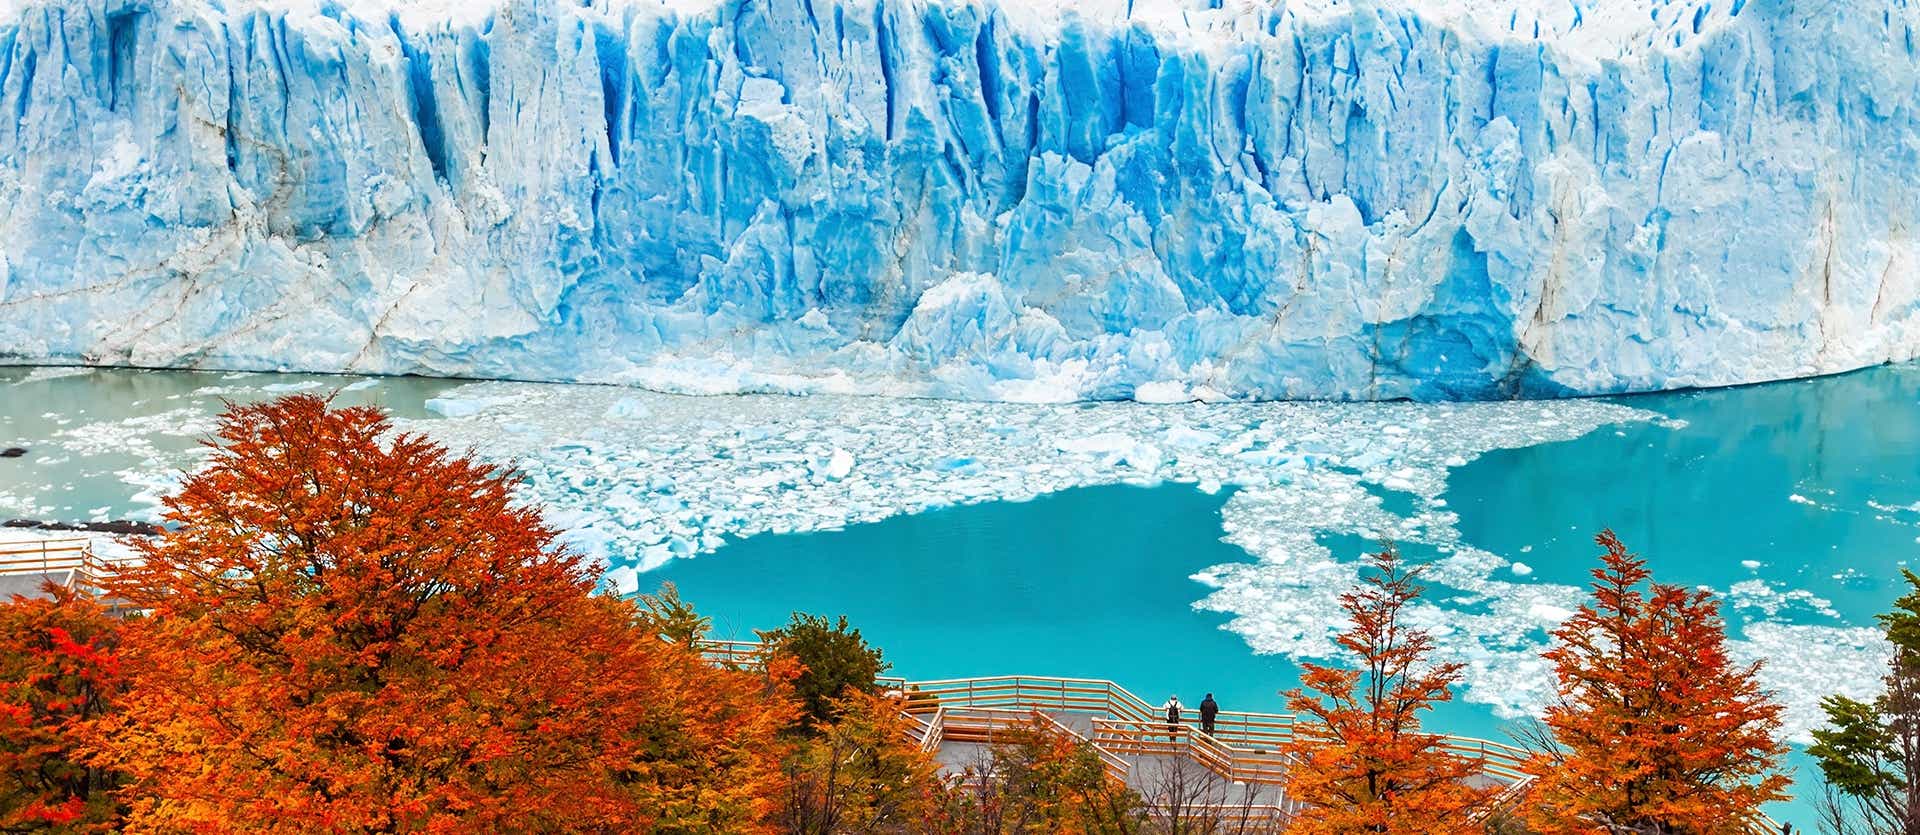 Perito Moreno Glacier <span class="iconos separador"></span> El Calafate <span class="iconos separador"></span> Argentina